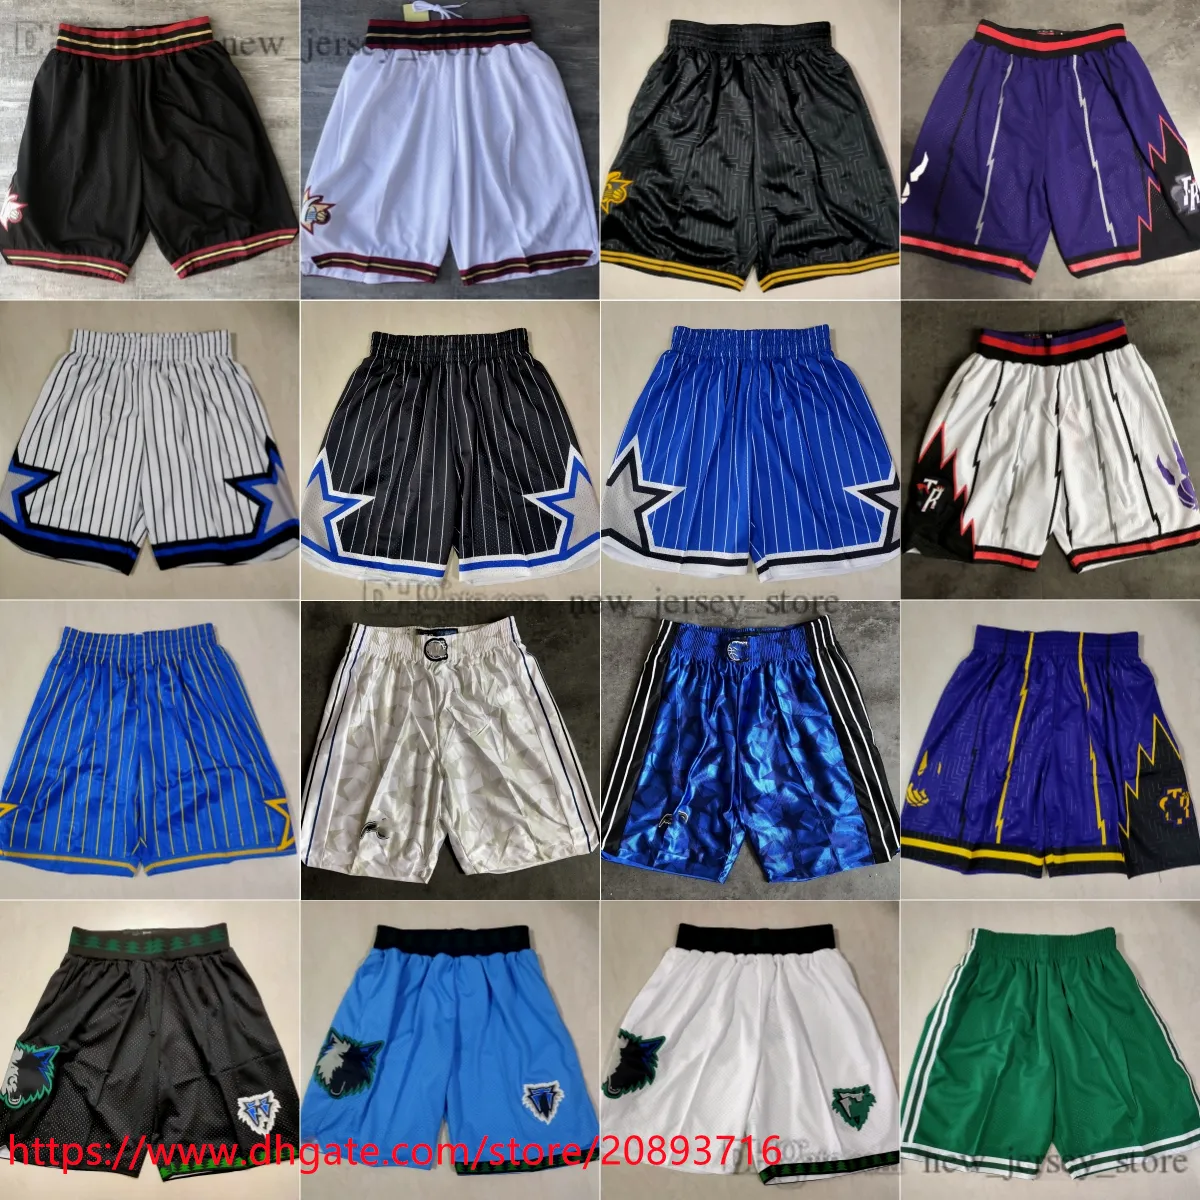 Classic Retro Basketball Shorts Stitched Man Baskeball Breathable Gym Training Beach Pants Sweatpants Pant Pocket Short S-XXL